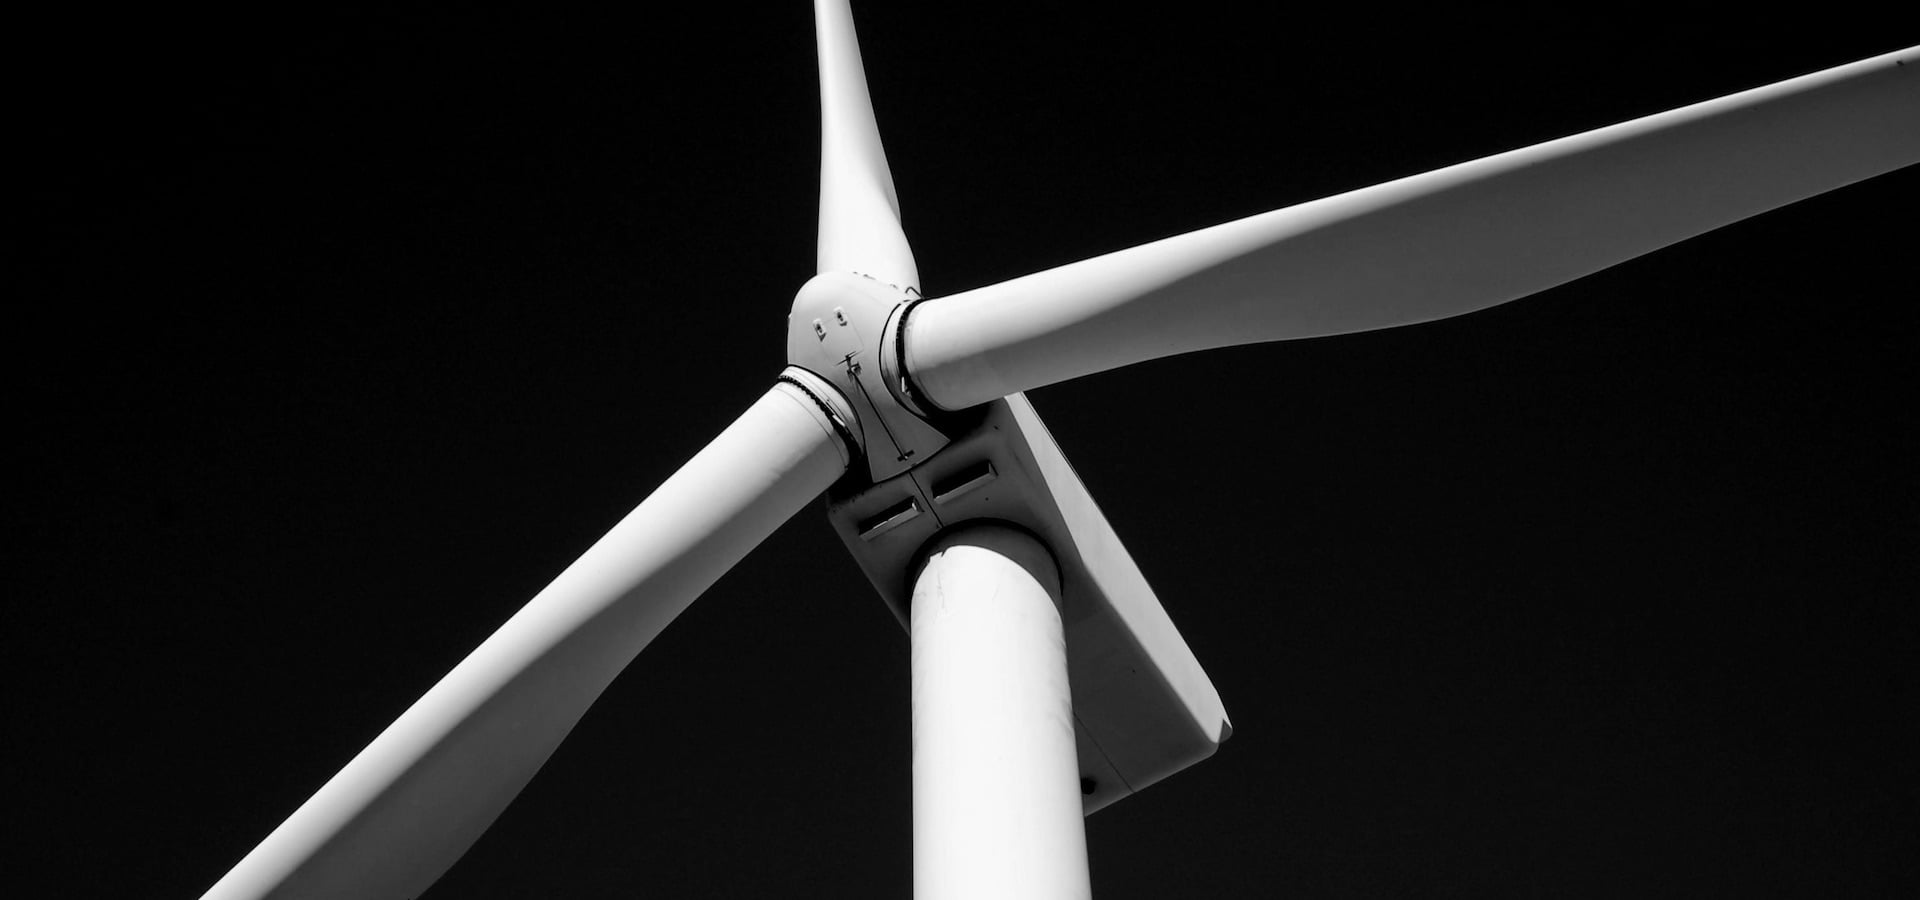 Huge wind turbine black and white